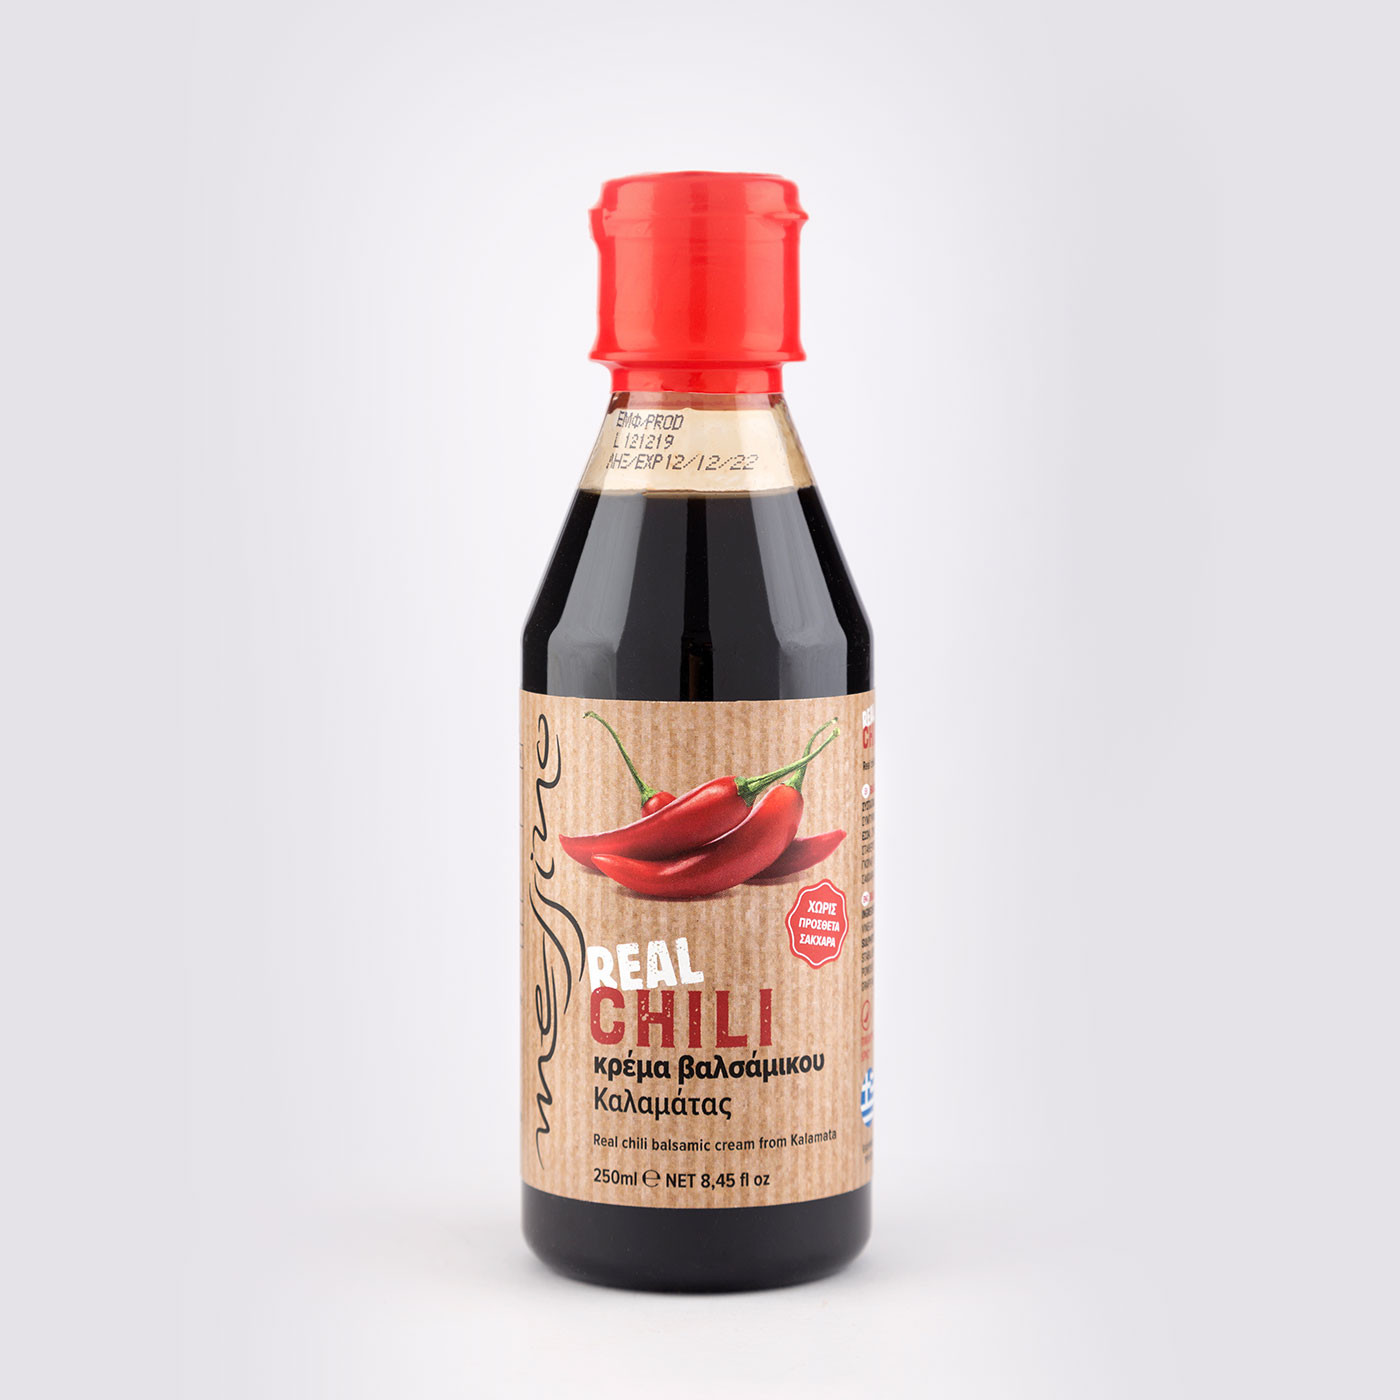 Real Chili Κρέμα βαλσάμικου Καλαμάτας "Messino" 250 ml